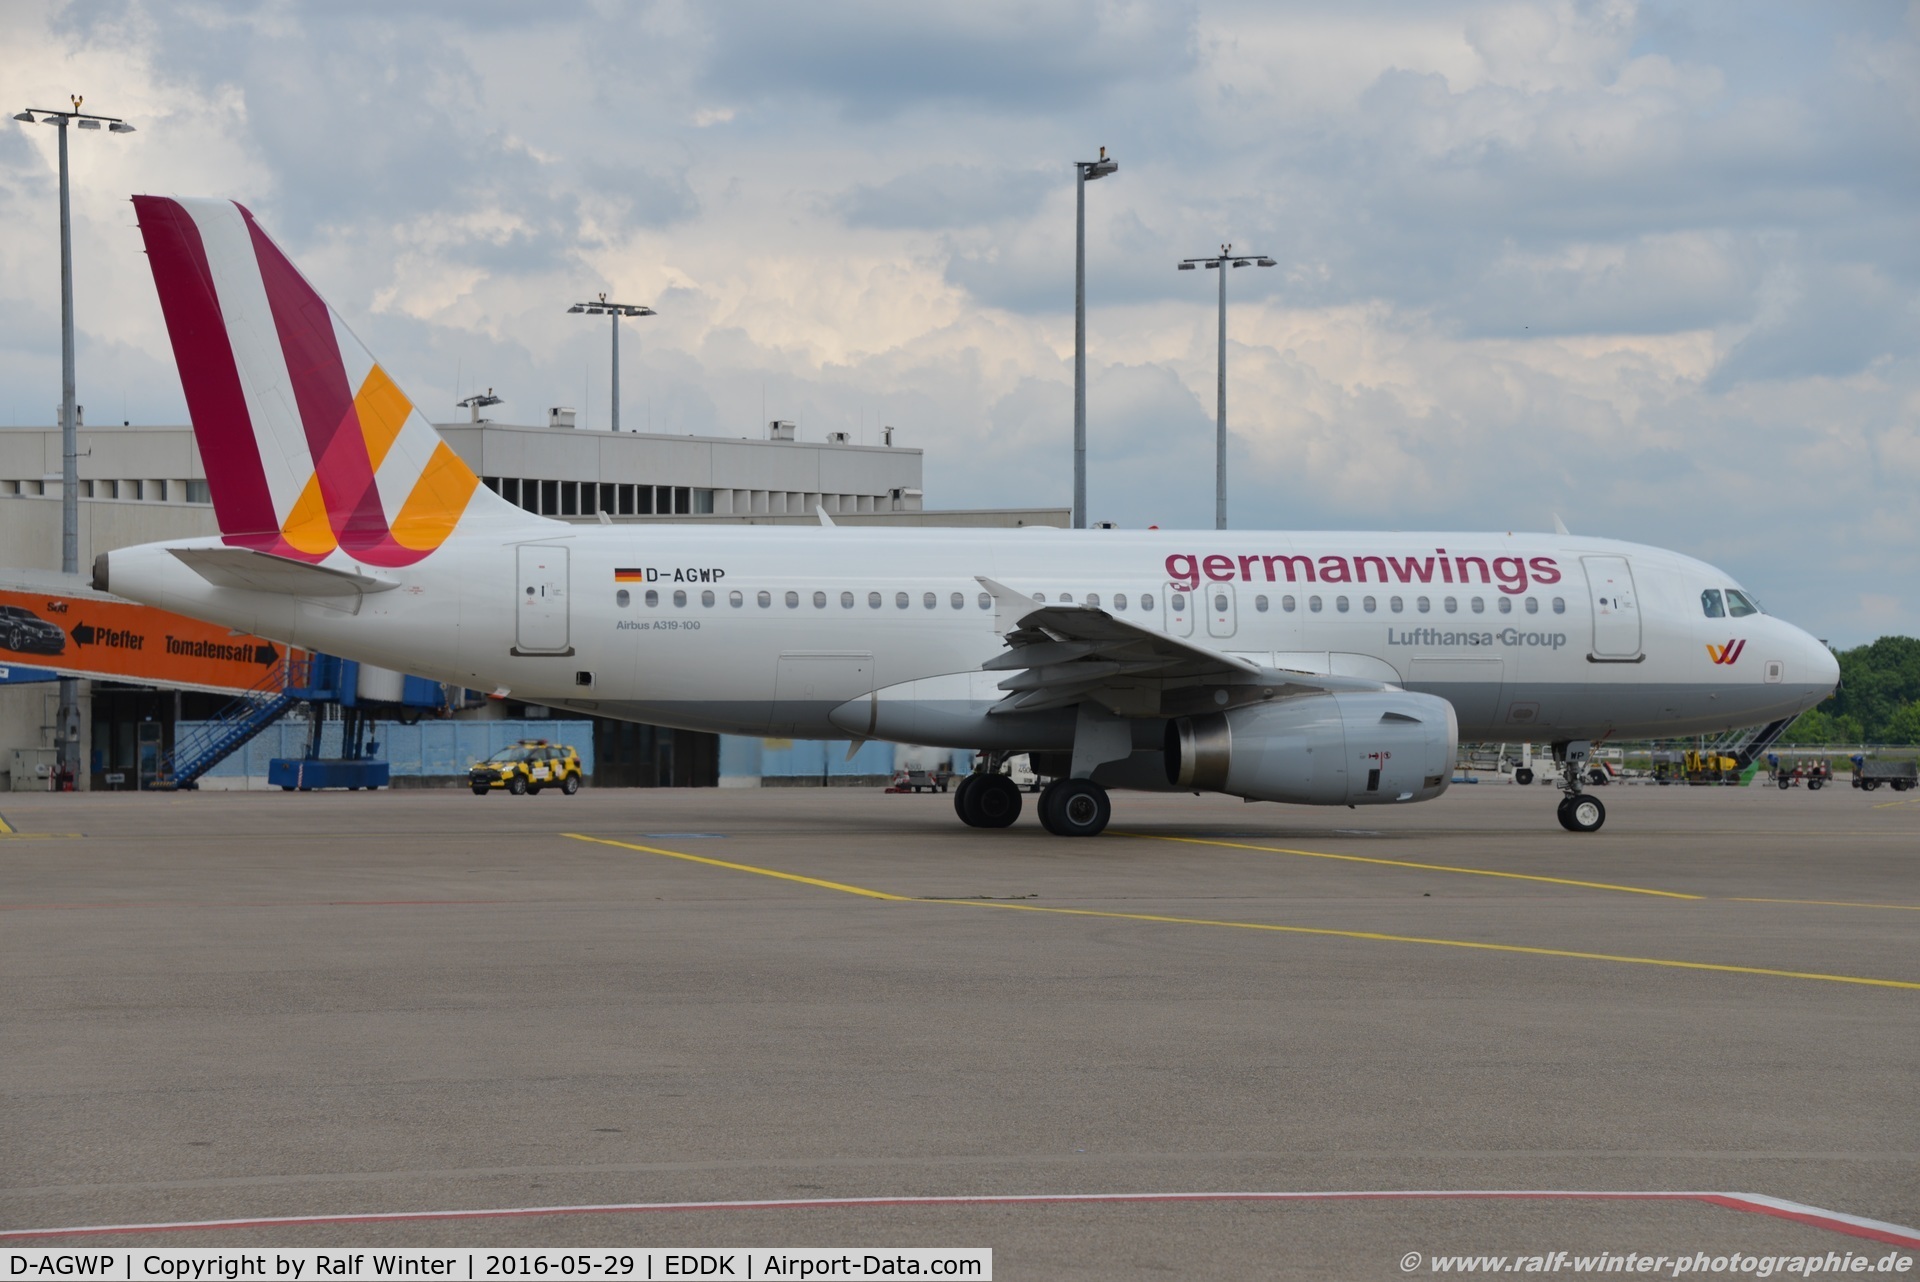 D-AGWP, 2010 Airbus A319-132 C/N 4227, Airbus A319-132 - 4U GWI Germanwings - 4227 - D-AGWP - 29.05.2016 - CGN